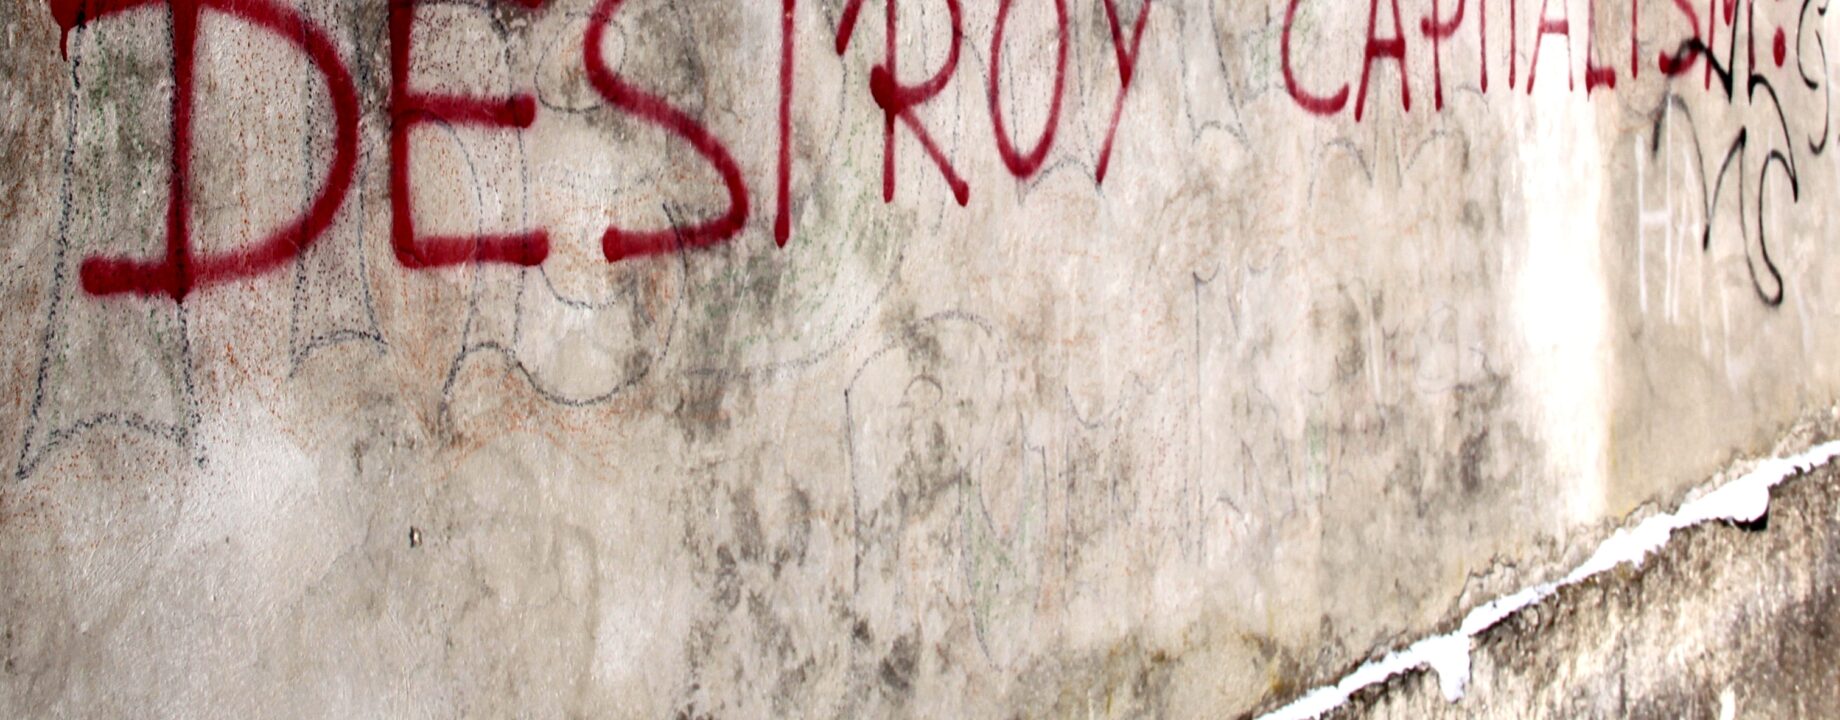 Graffito Destroy Capitalism Steyr